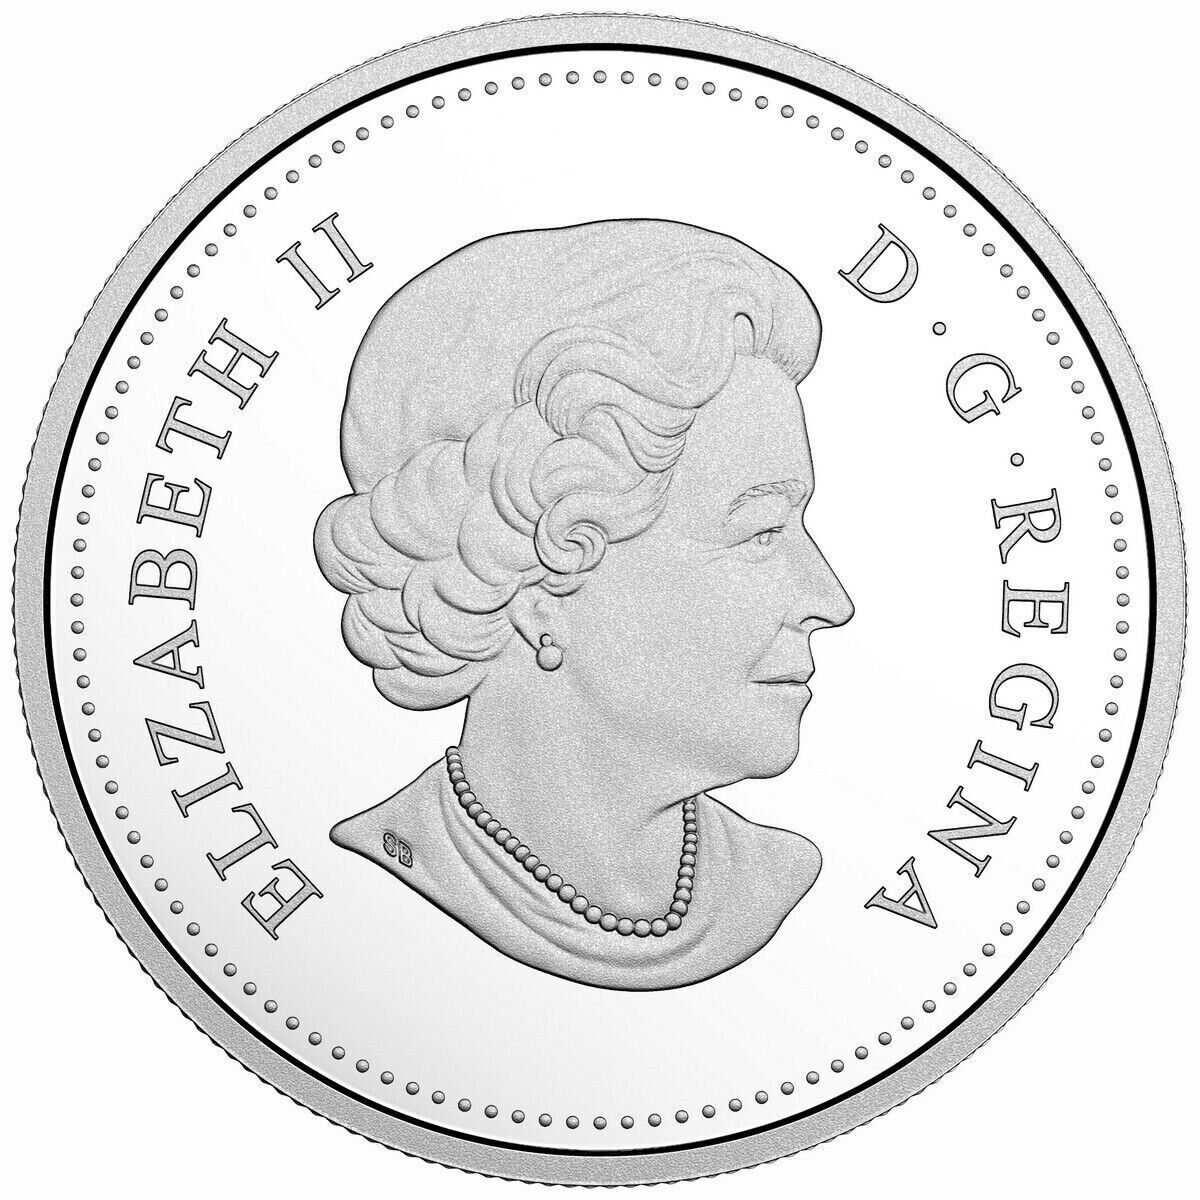 1 oz Silver Coin 2014 Canada $20 Color Proof RCM - Autumn Tranquillity-classypw.com-1